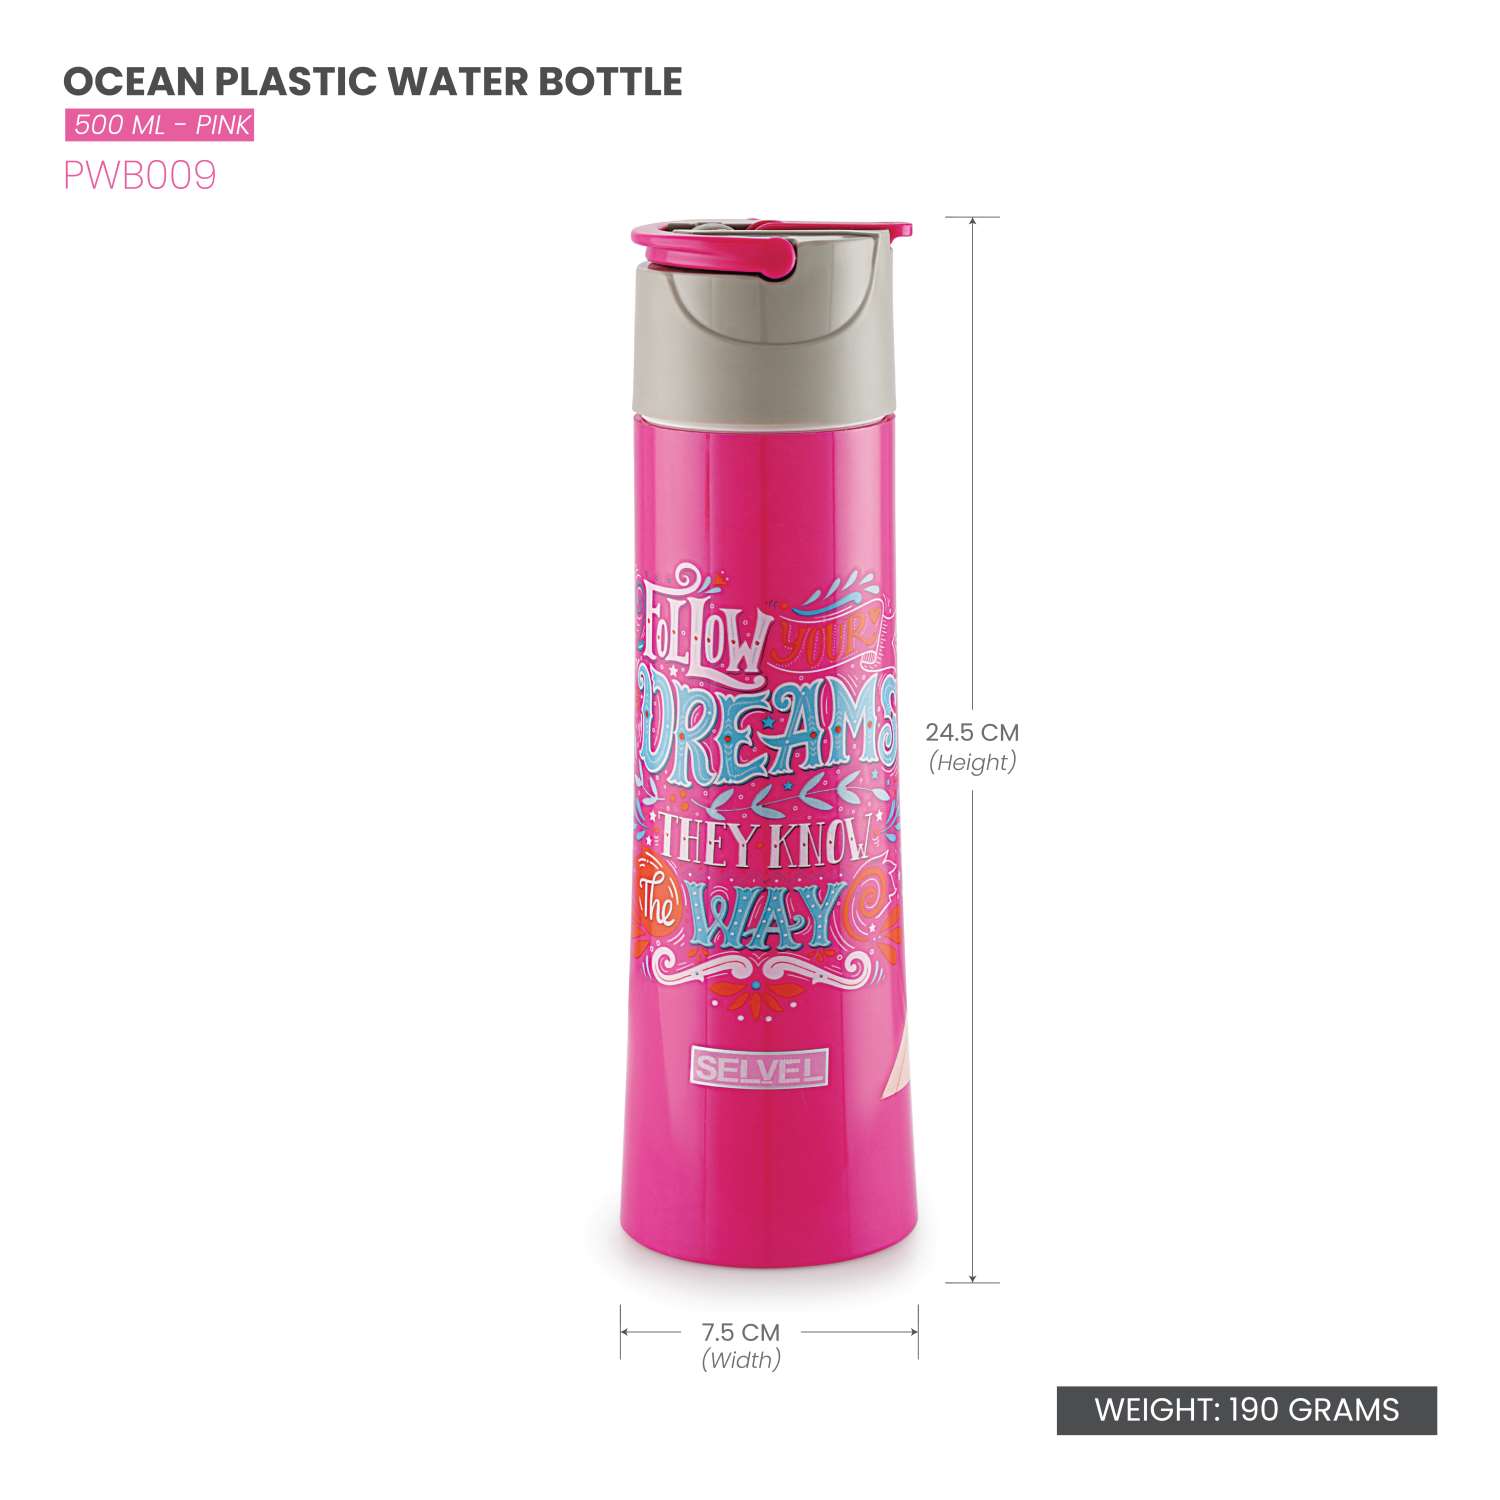 Selvel Ocean Plastic Water Bottle Pink 500Ml